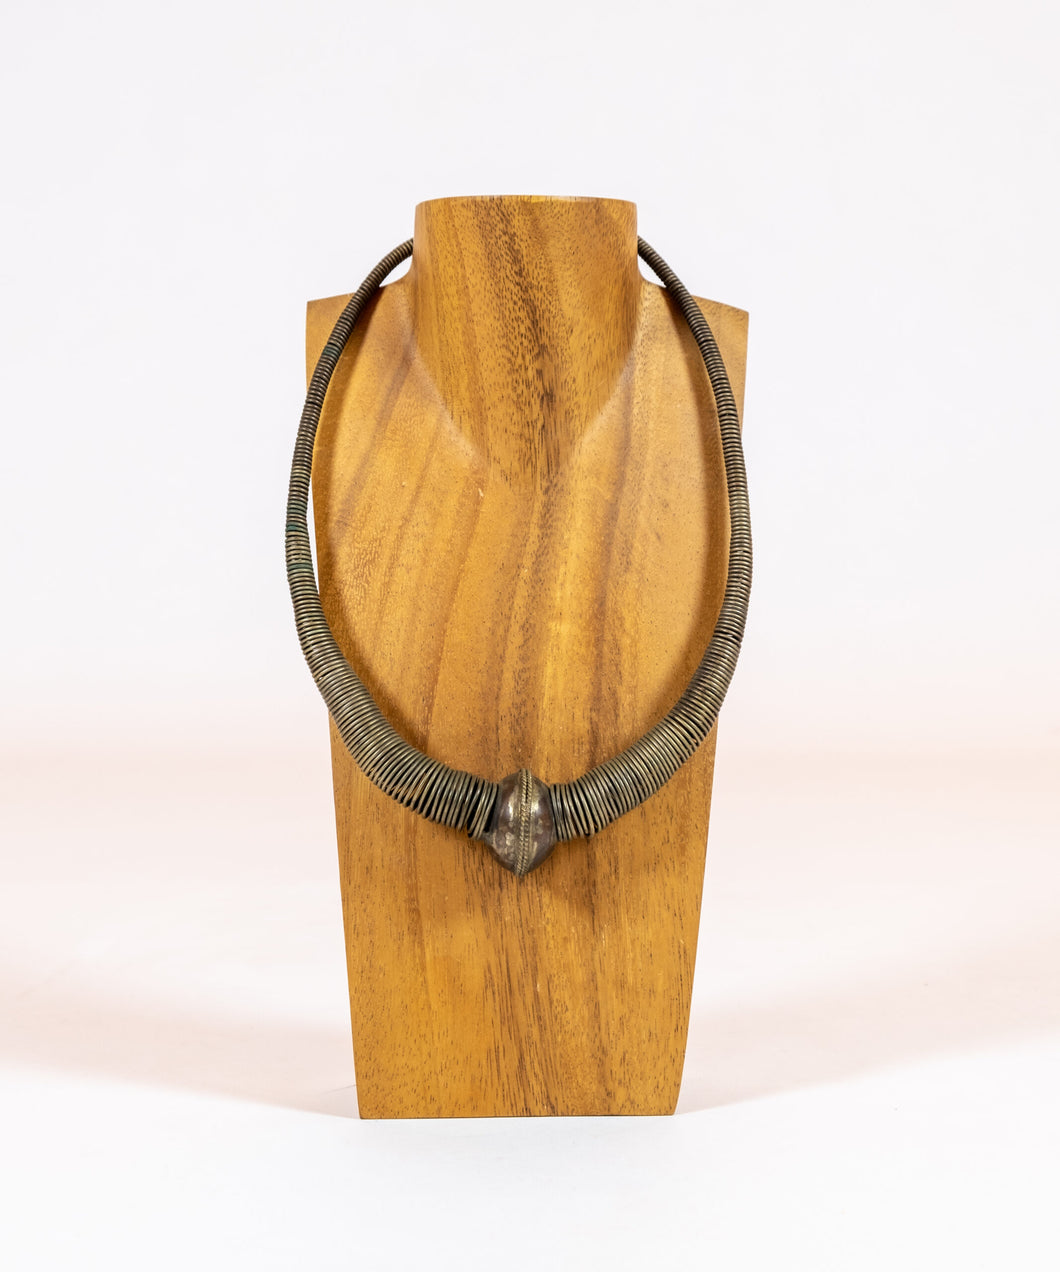 Nias Island Tribal Warrior's Headhunter Necklace